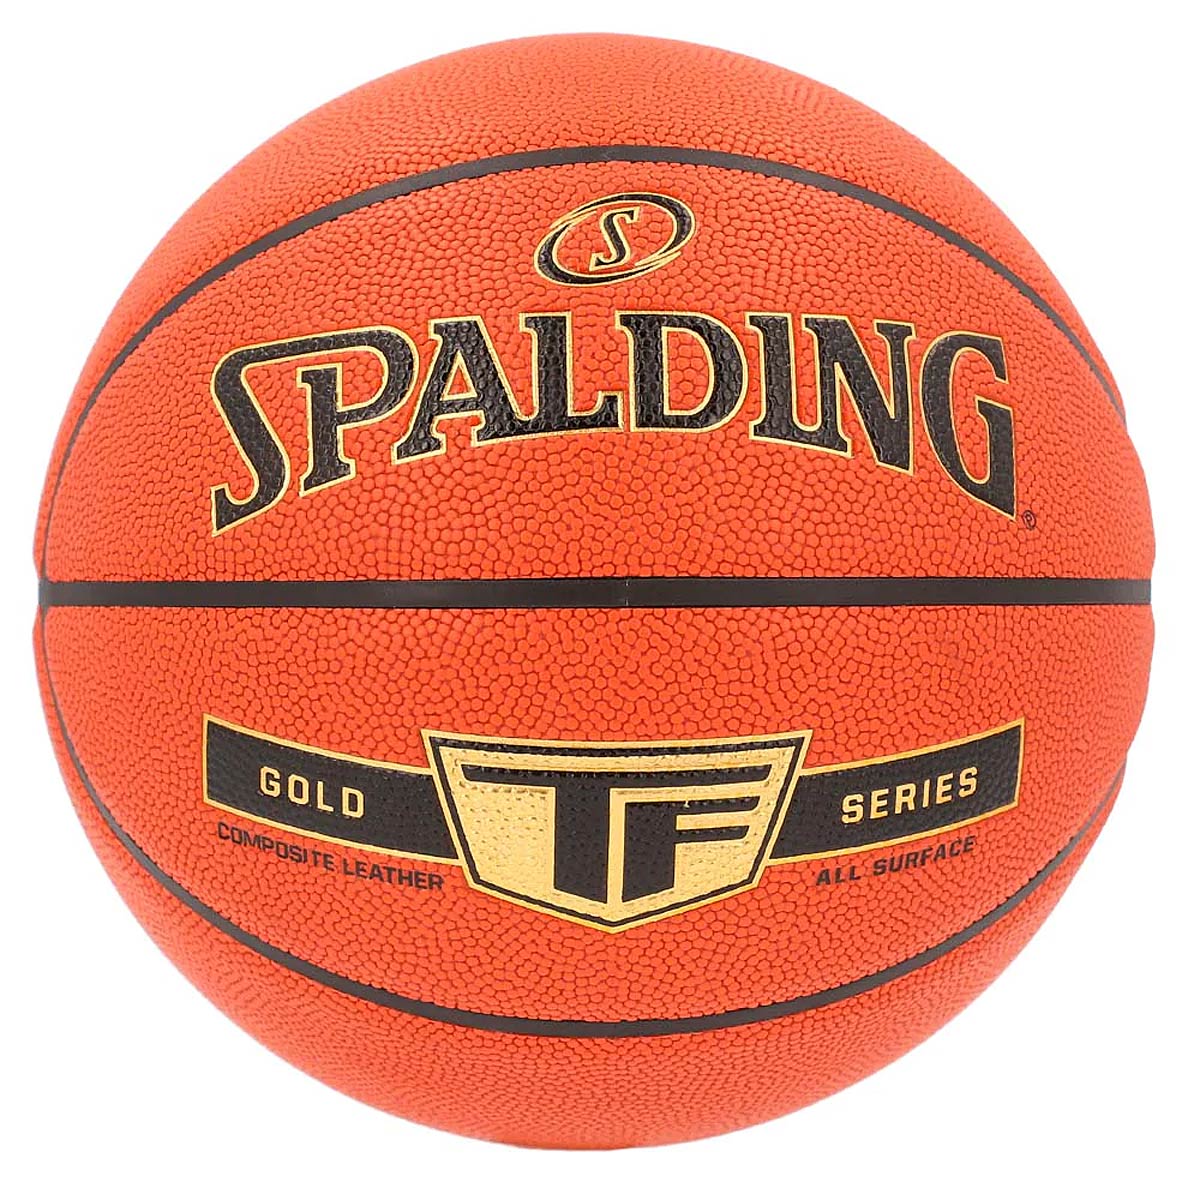 Image of Spalding Tf Gold Sz5 Composite Basketball, Orange